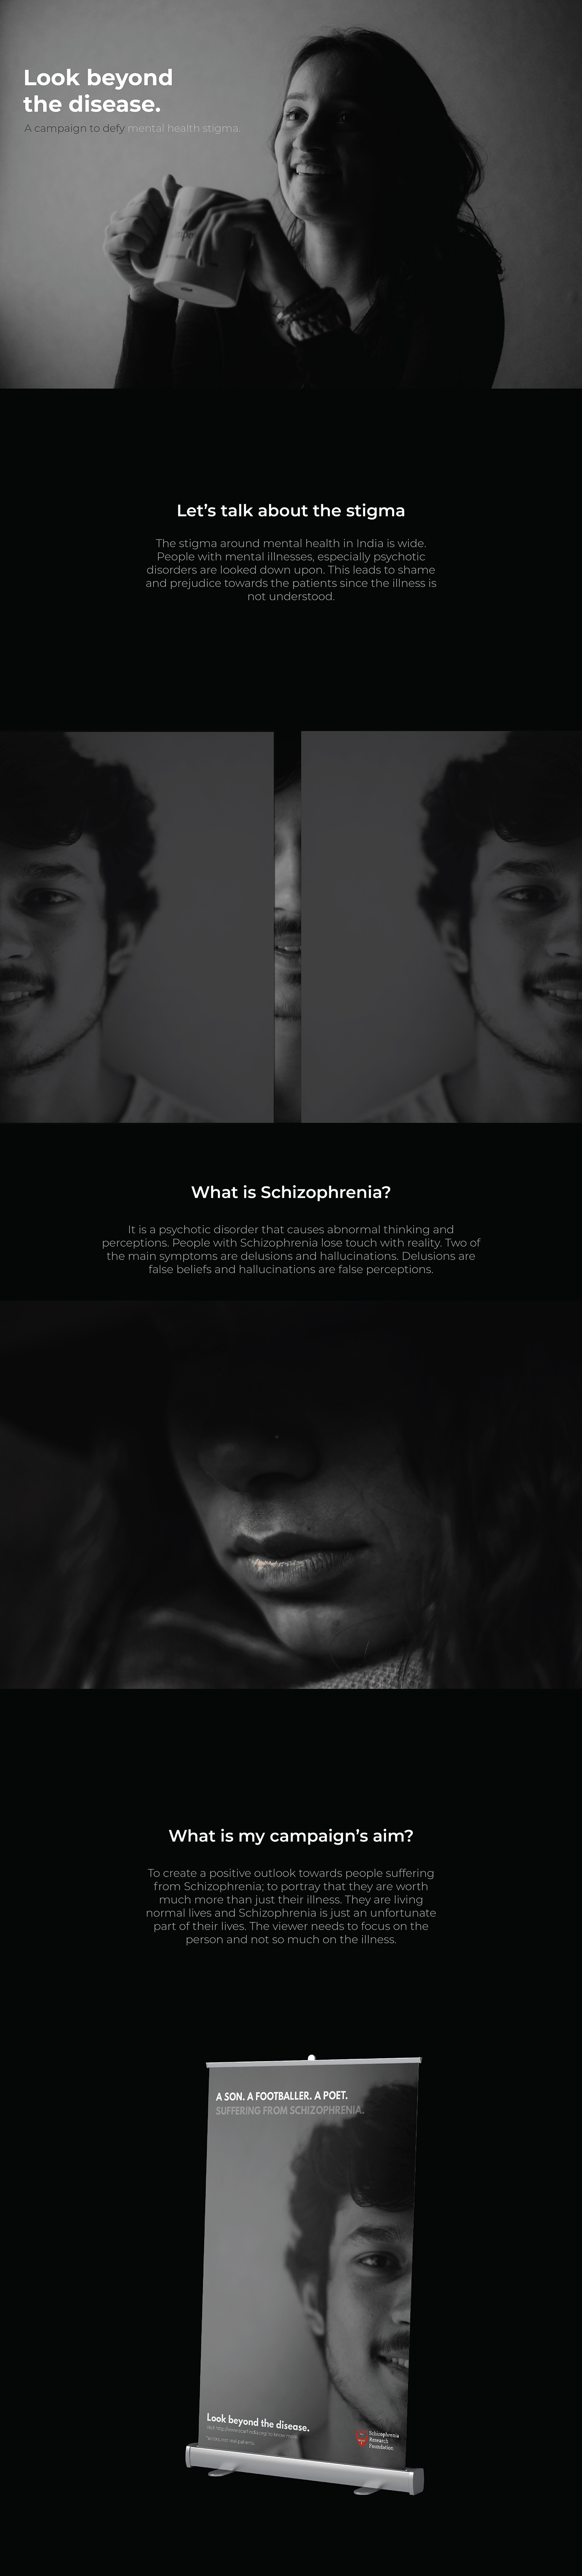 CSR mental health Pyschotic Disorder Schizophrenia positive campaign mental illness